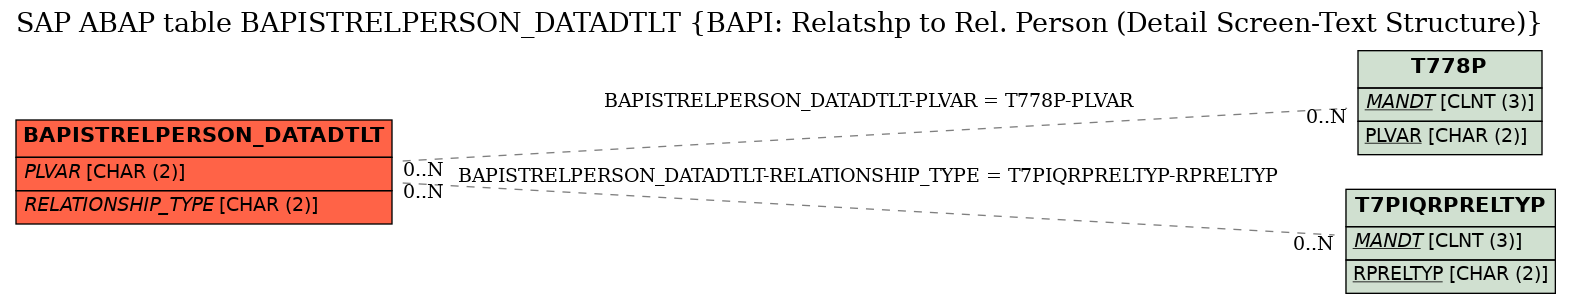 E-R Diagram for table BAPISTRELPERSON_DATADTLT (BAPI: Relatshp to Rel. Person (Detail Screen-Text Structure))